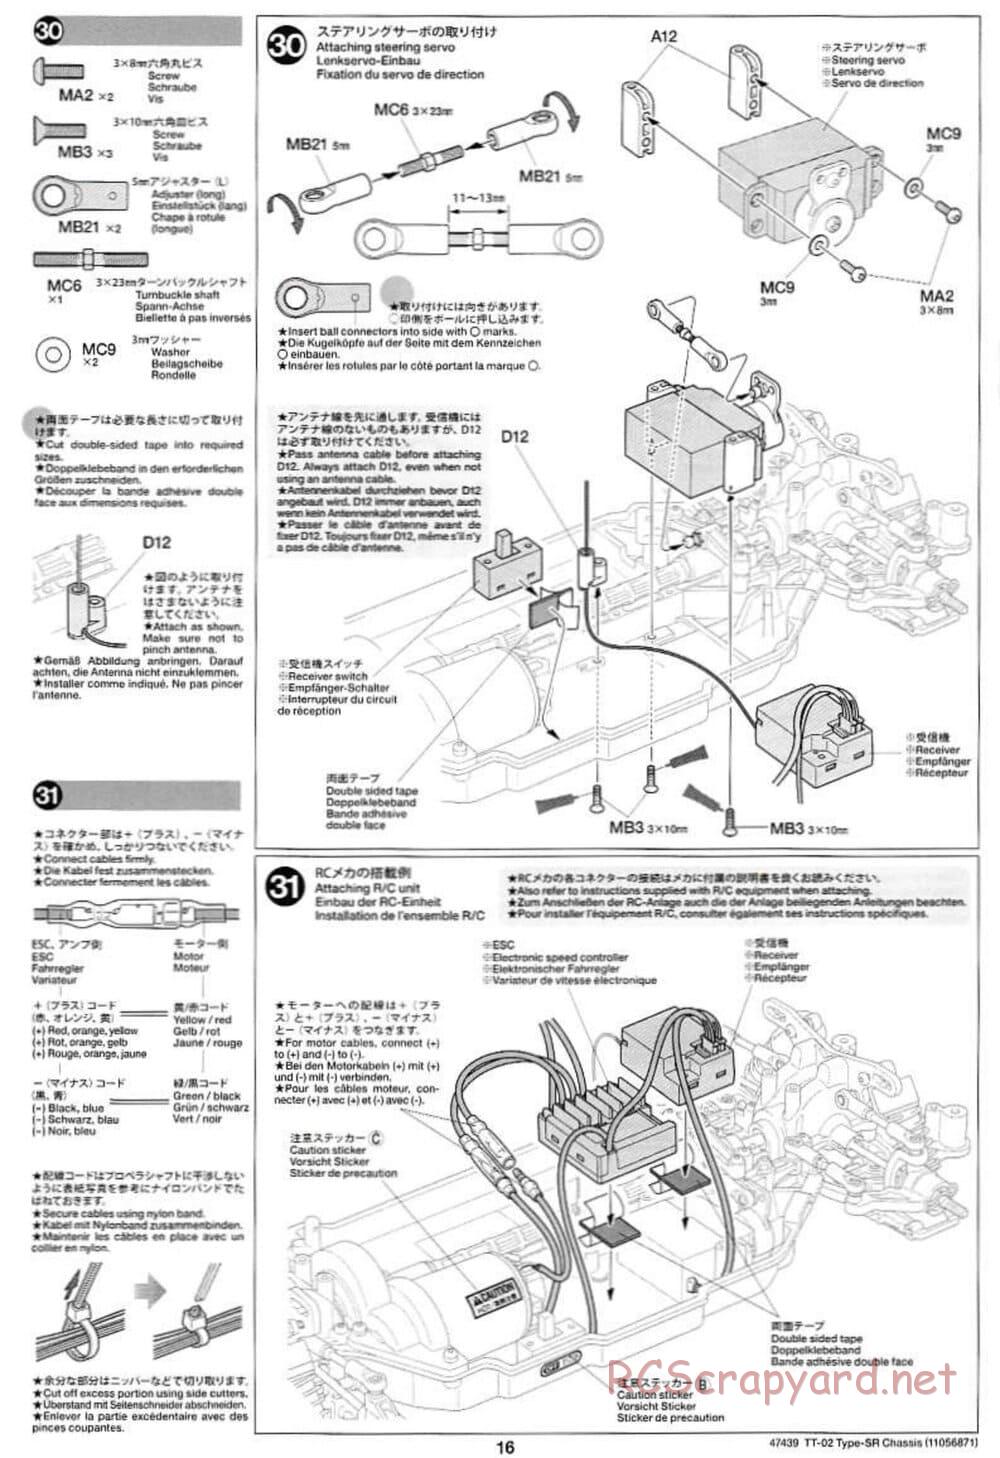 Tamiya - TT-02 Type-SR Chassis - Manual - Page 16